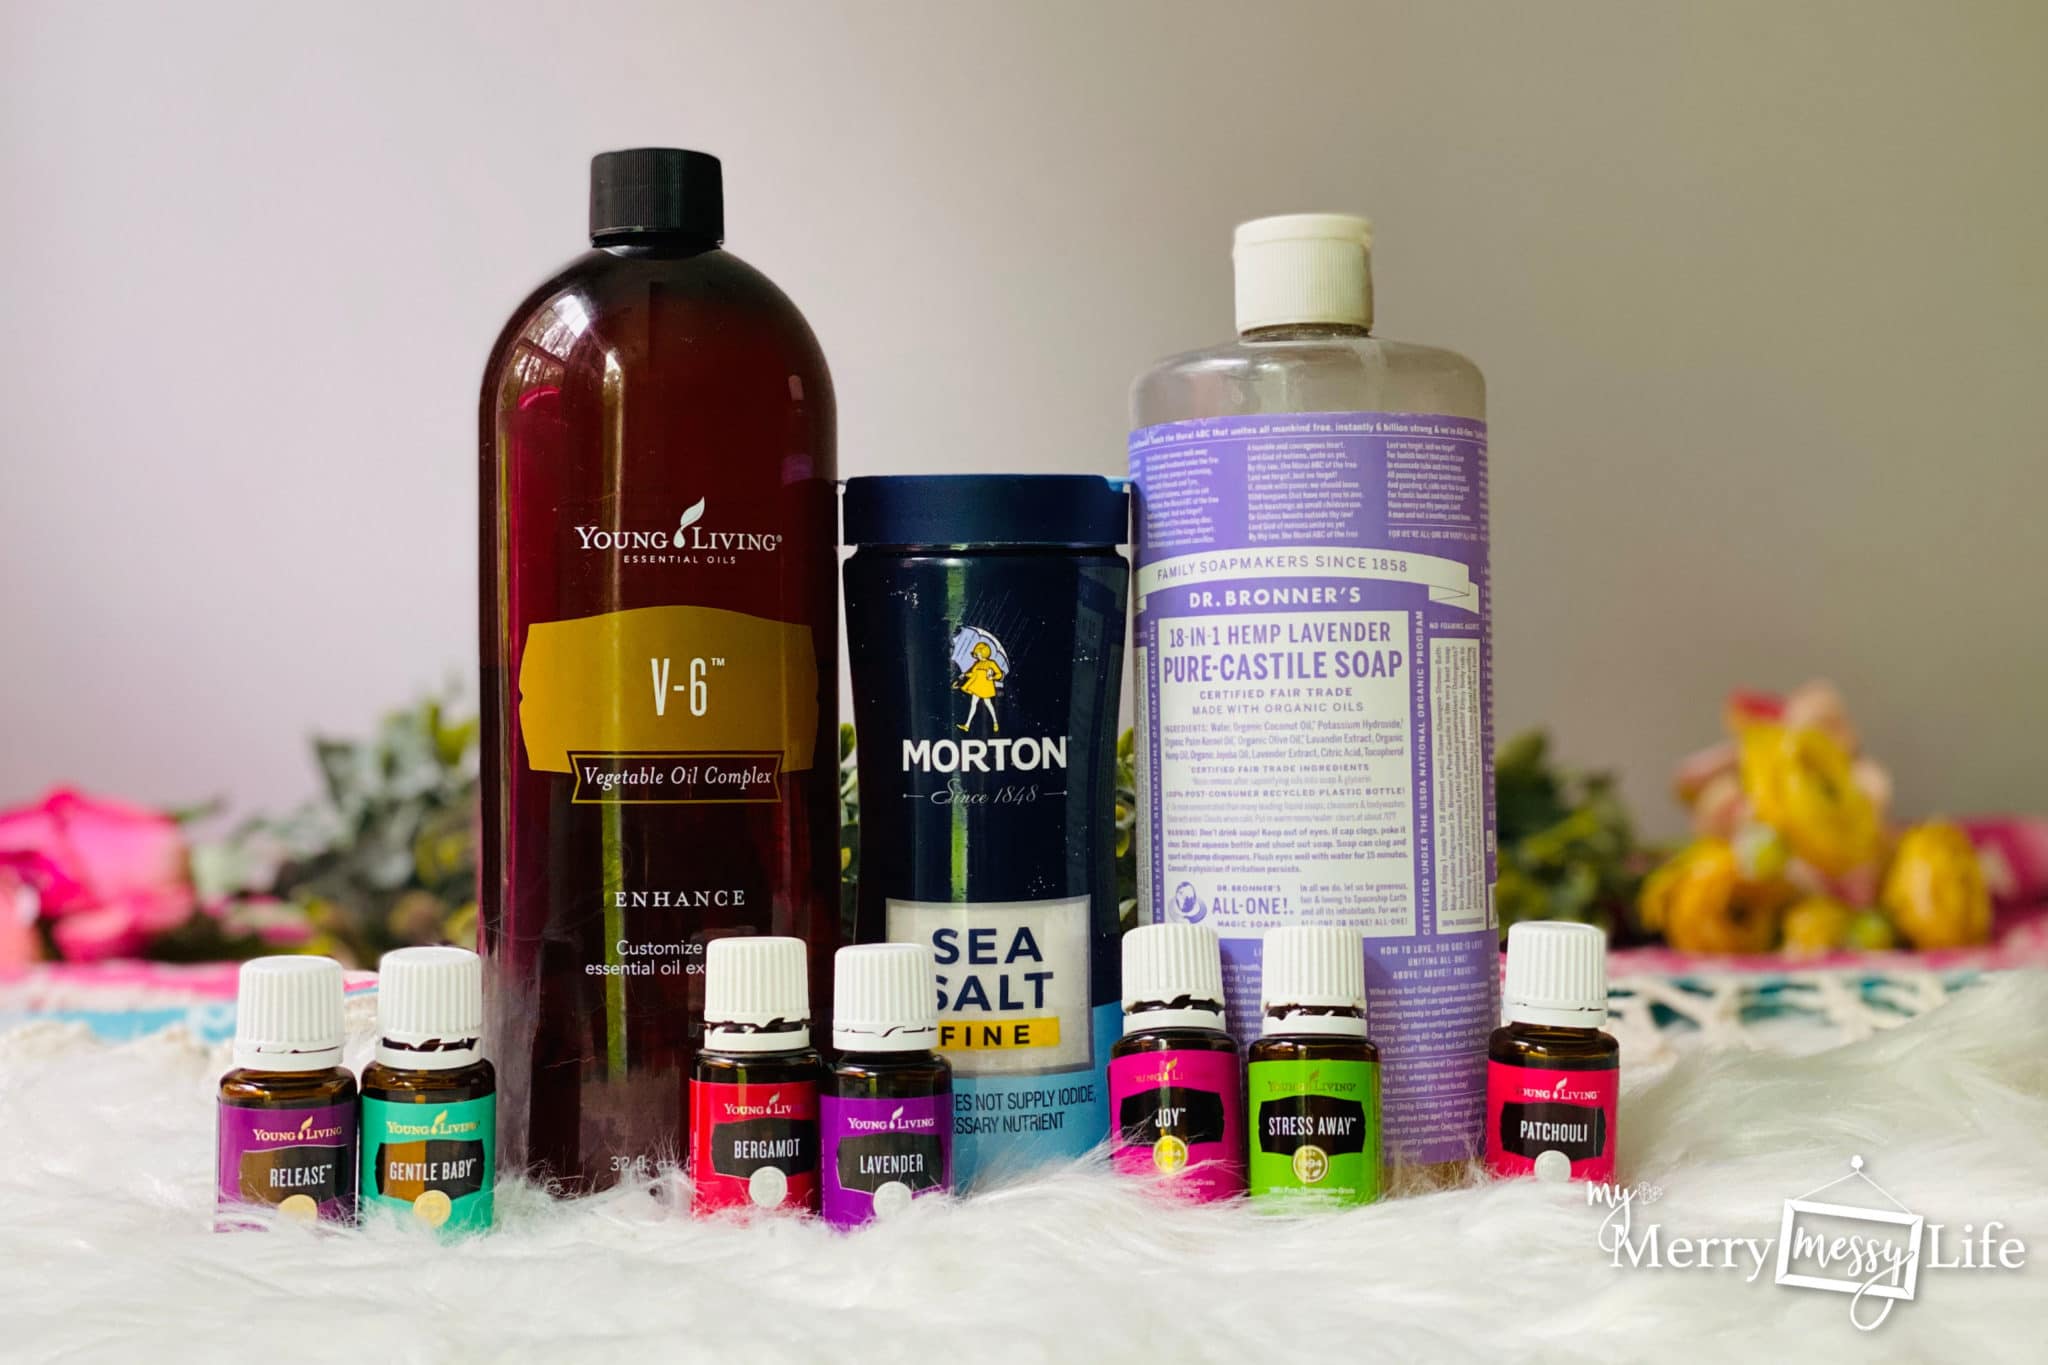 DIY Natural Shower Gel Ingredients - make your own shower gel at home with Castile Soap, essential oils, carrier oils, and more!